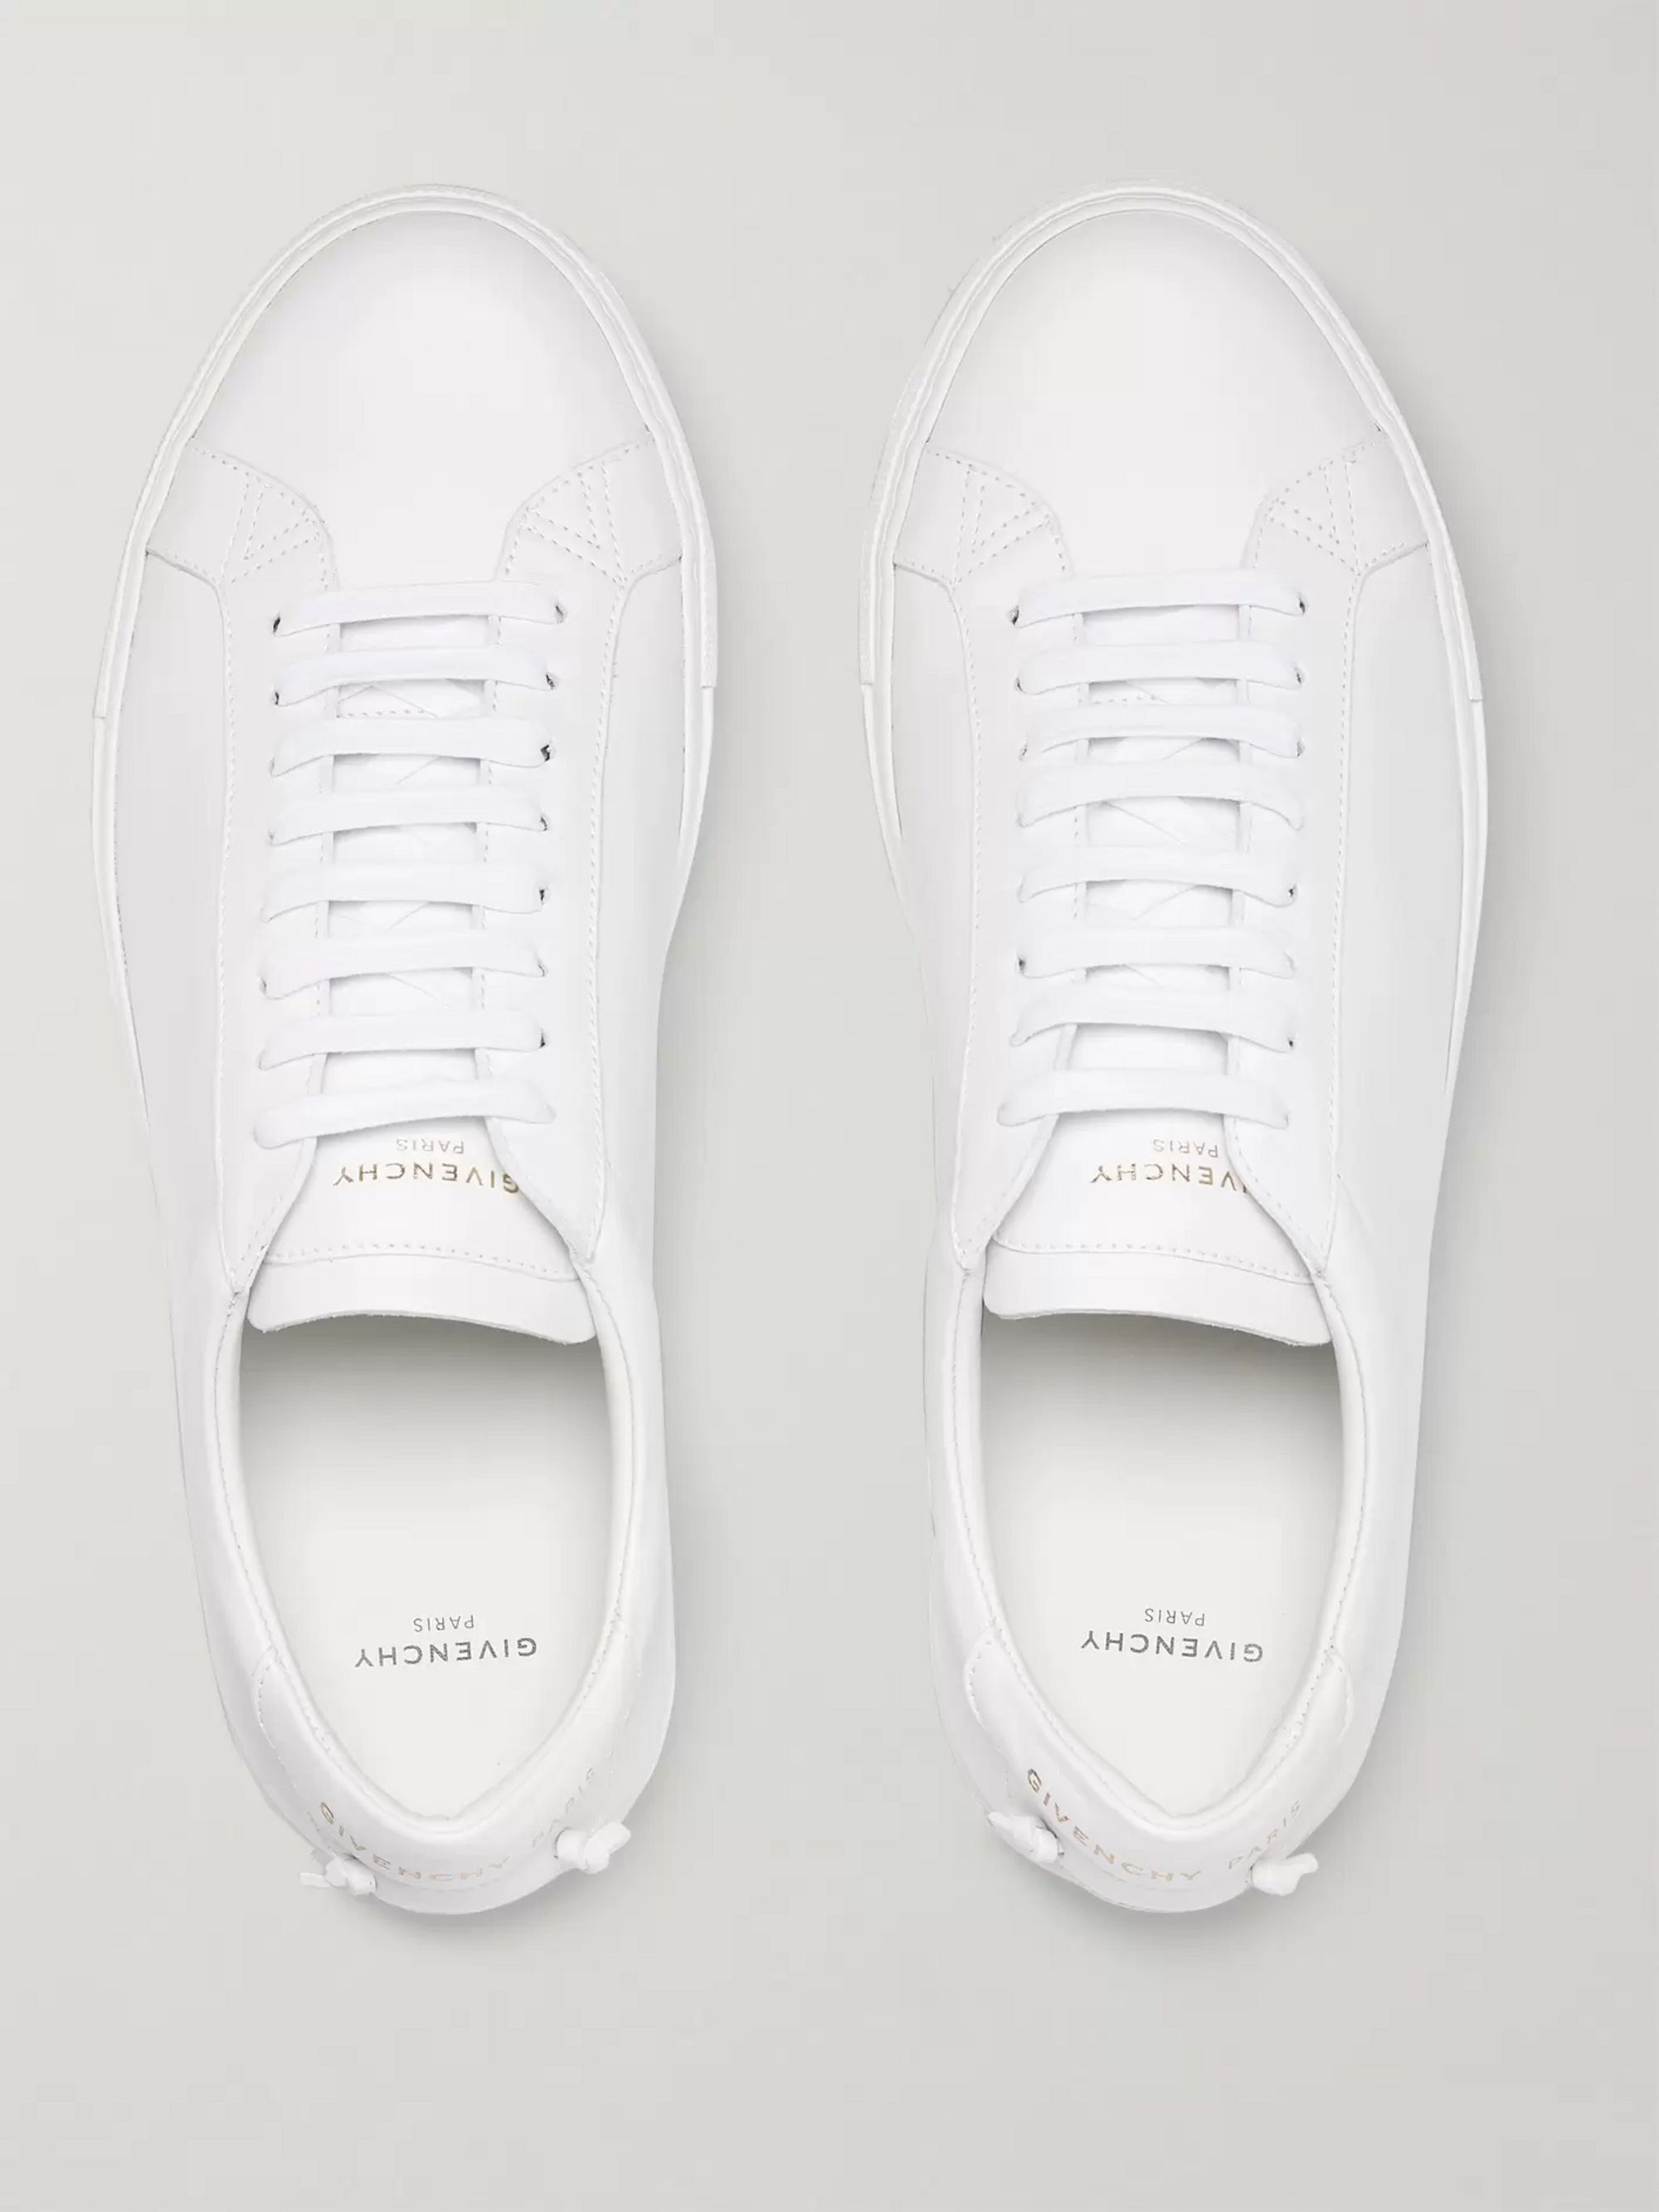 Gewöhnlich auszahlen Teil givenchy white leather sneakers Ithaka Bund ...